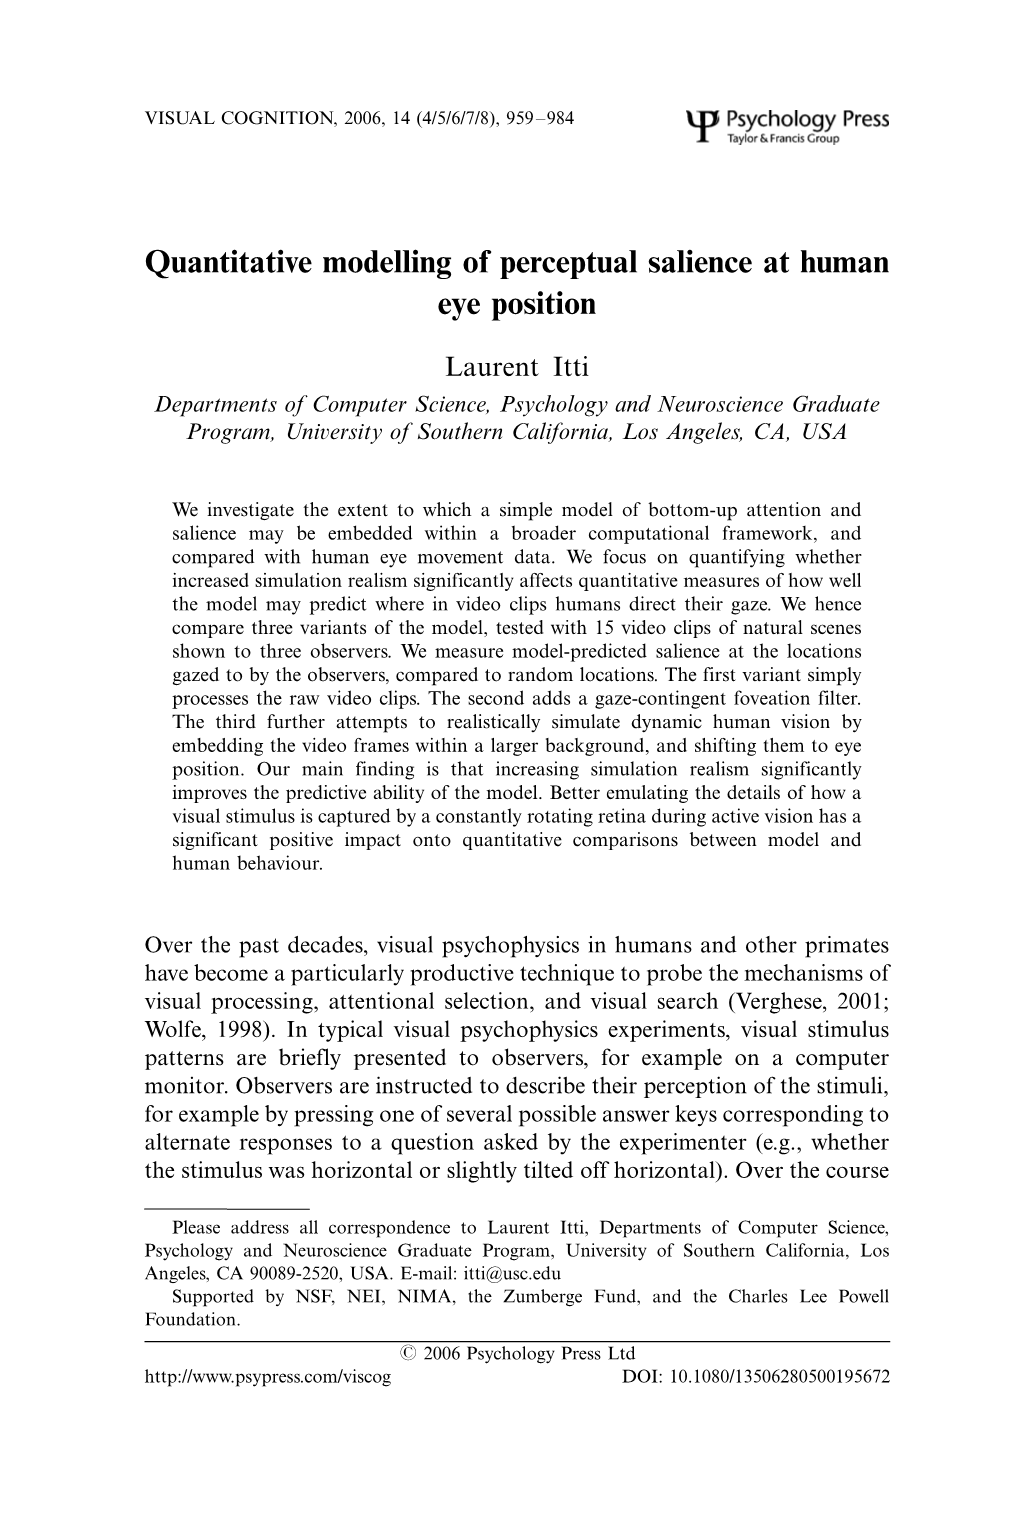 Quantitative Modelling of Perceptual Salience at Human Eye Position